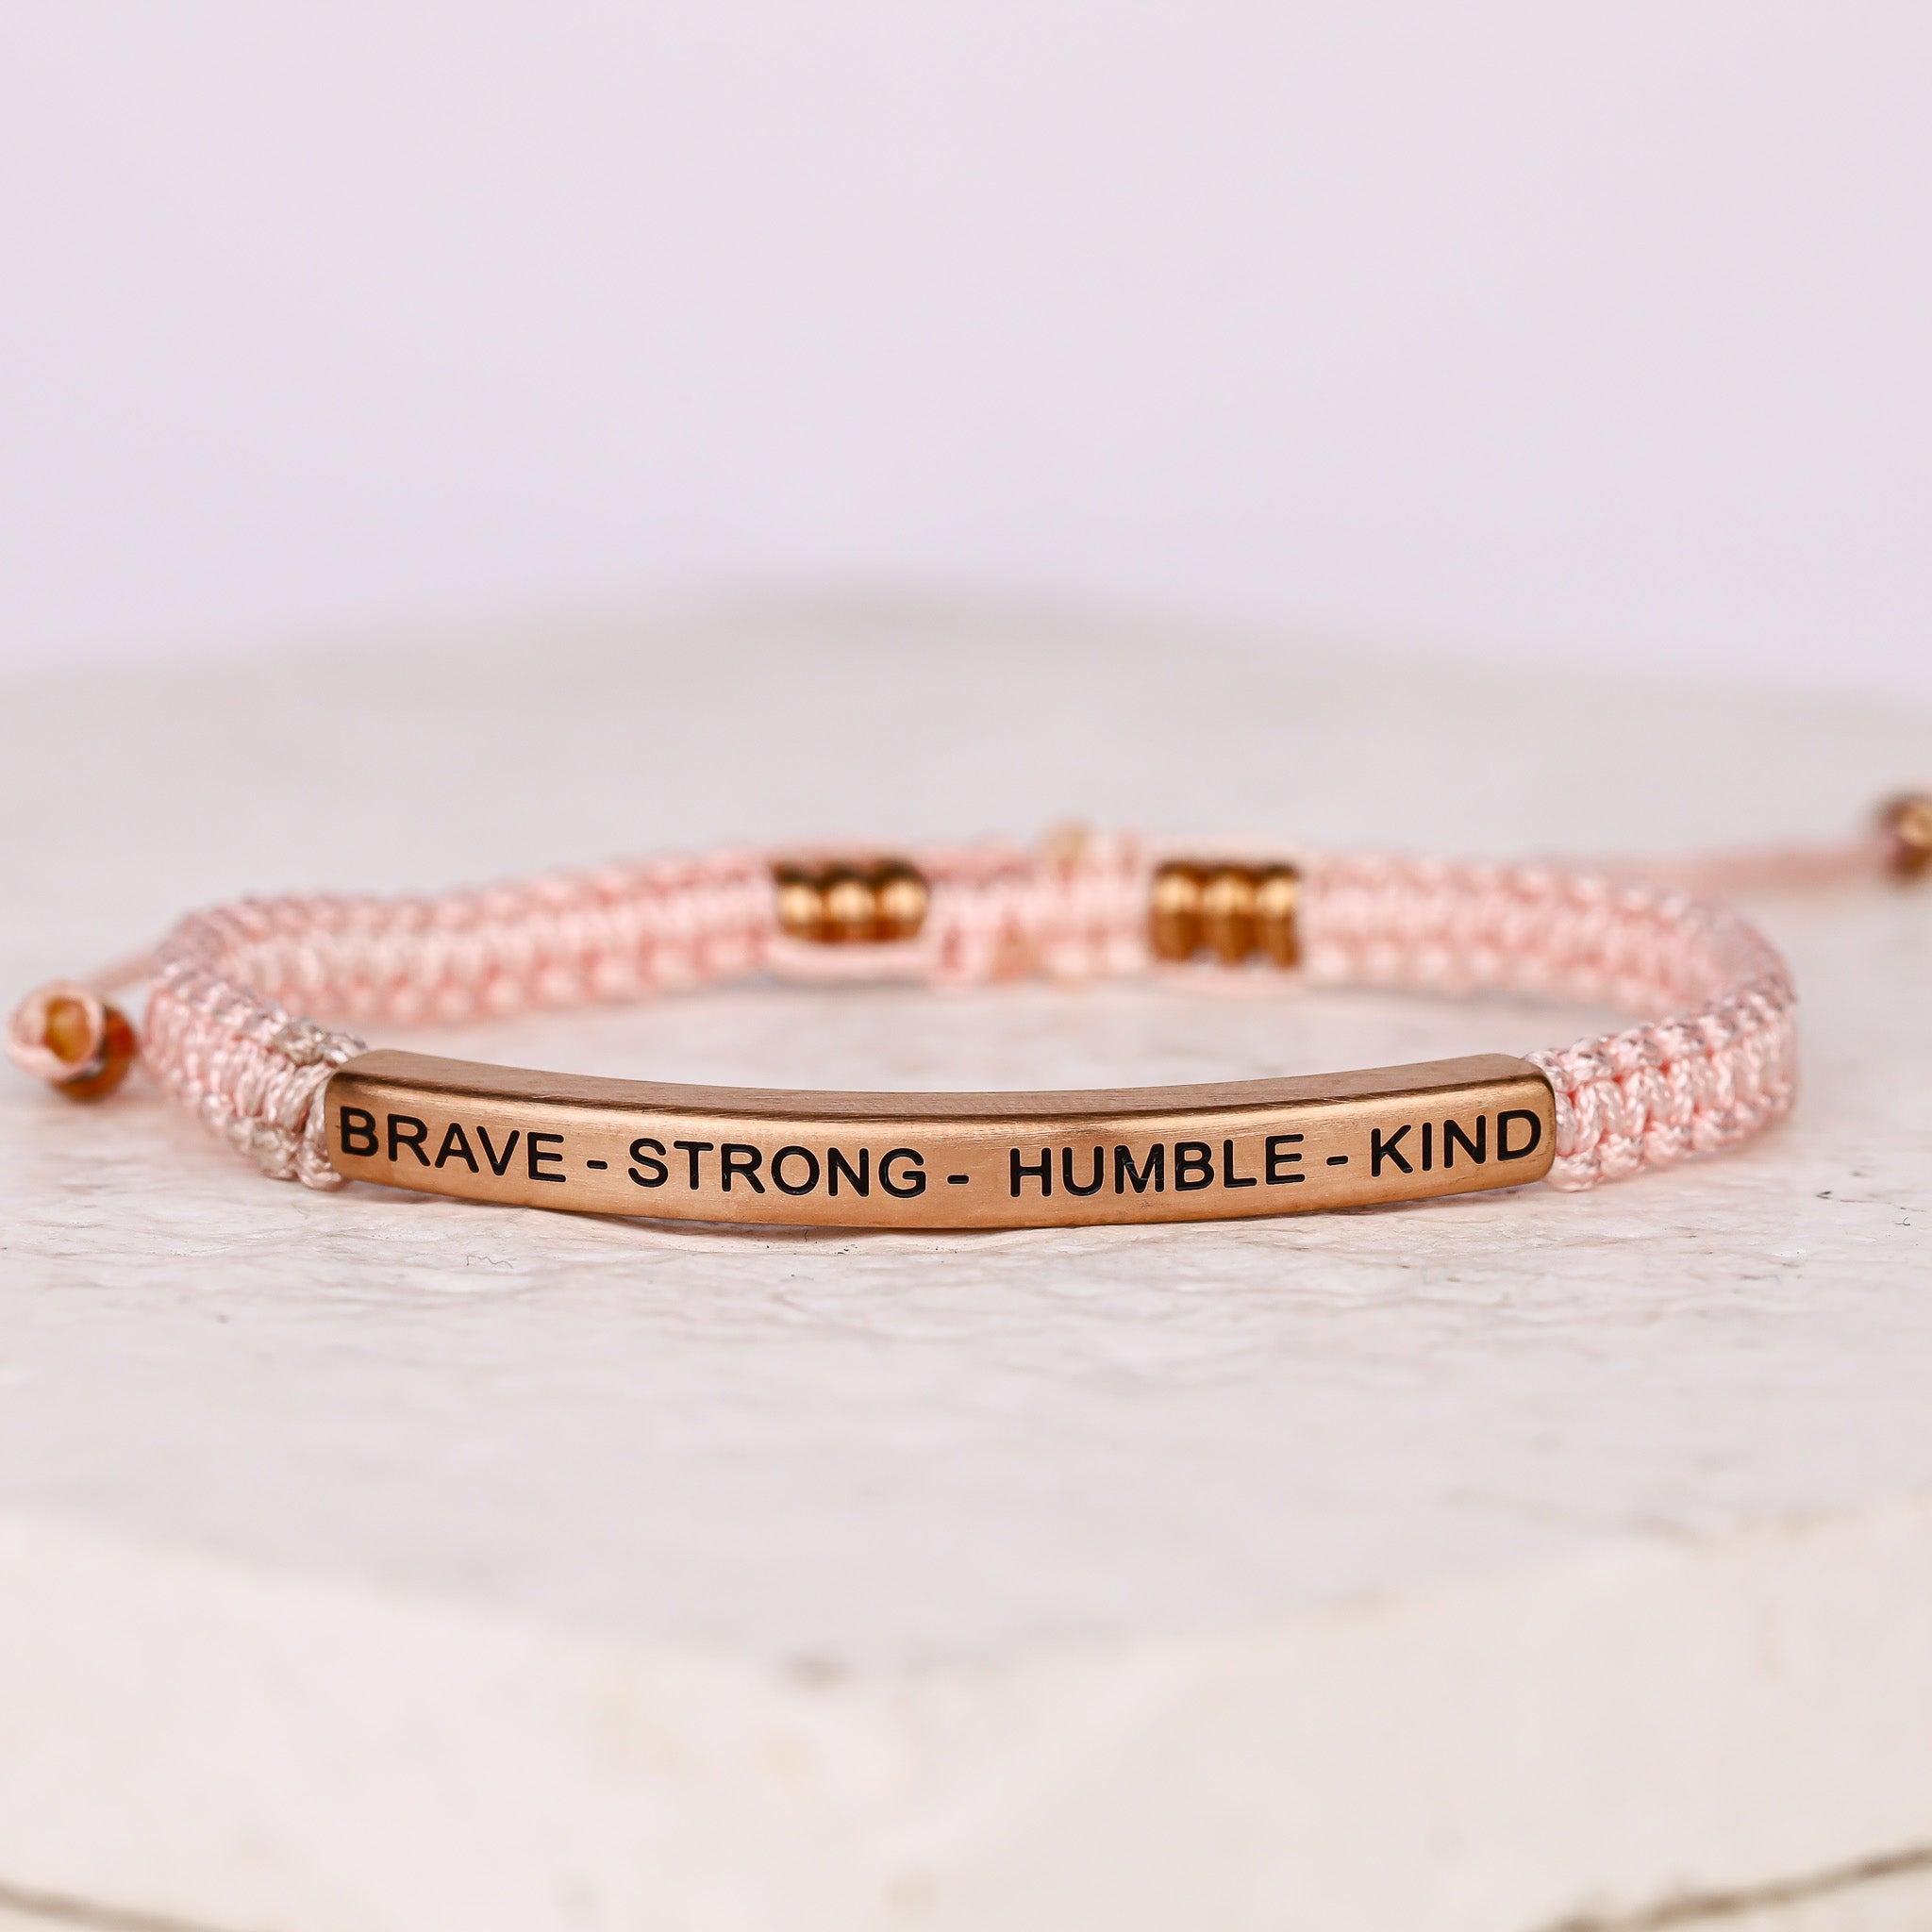 BRAVE - STRONG - HUMBLE - KIND ROPE BRACELET - Inspiration Co.